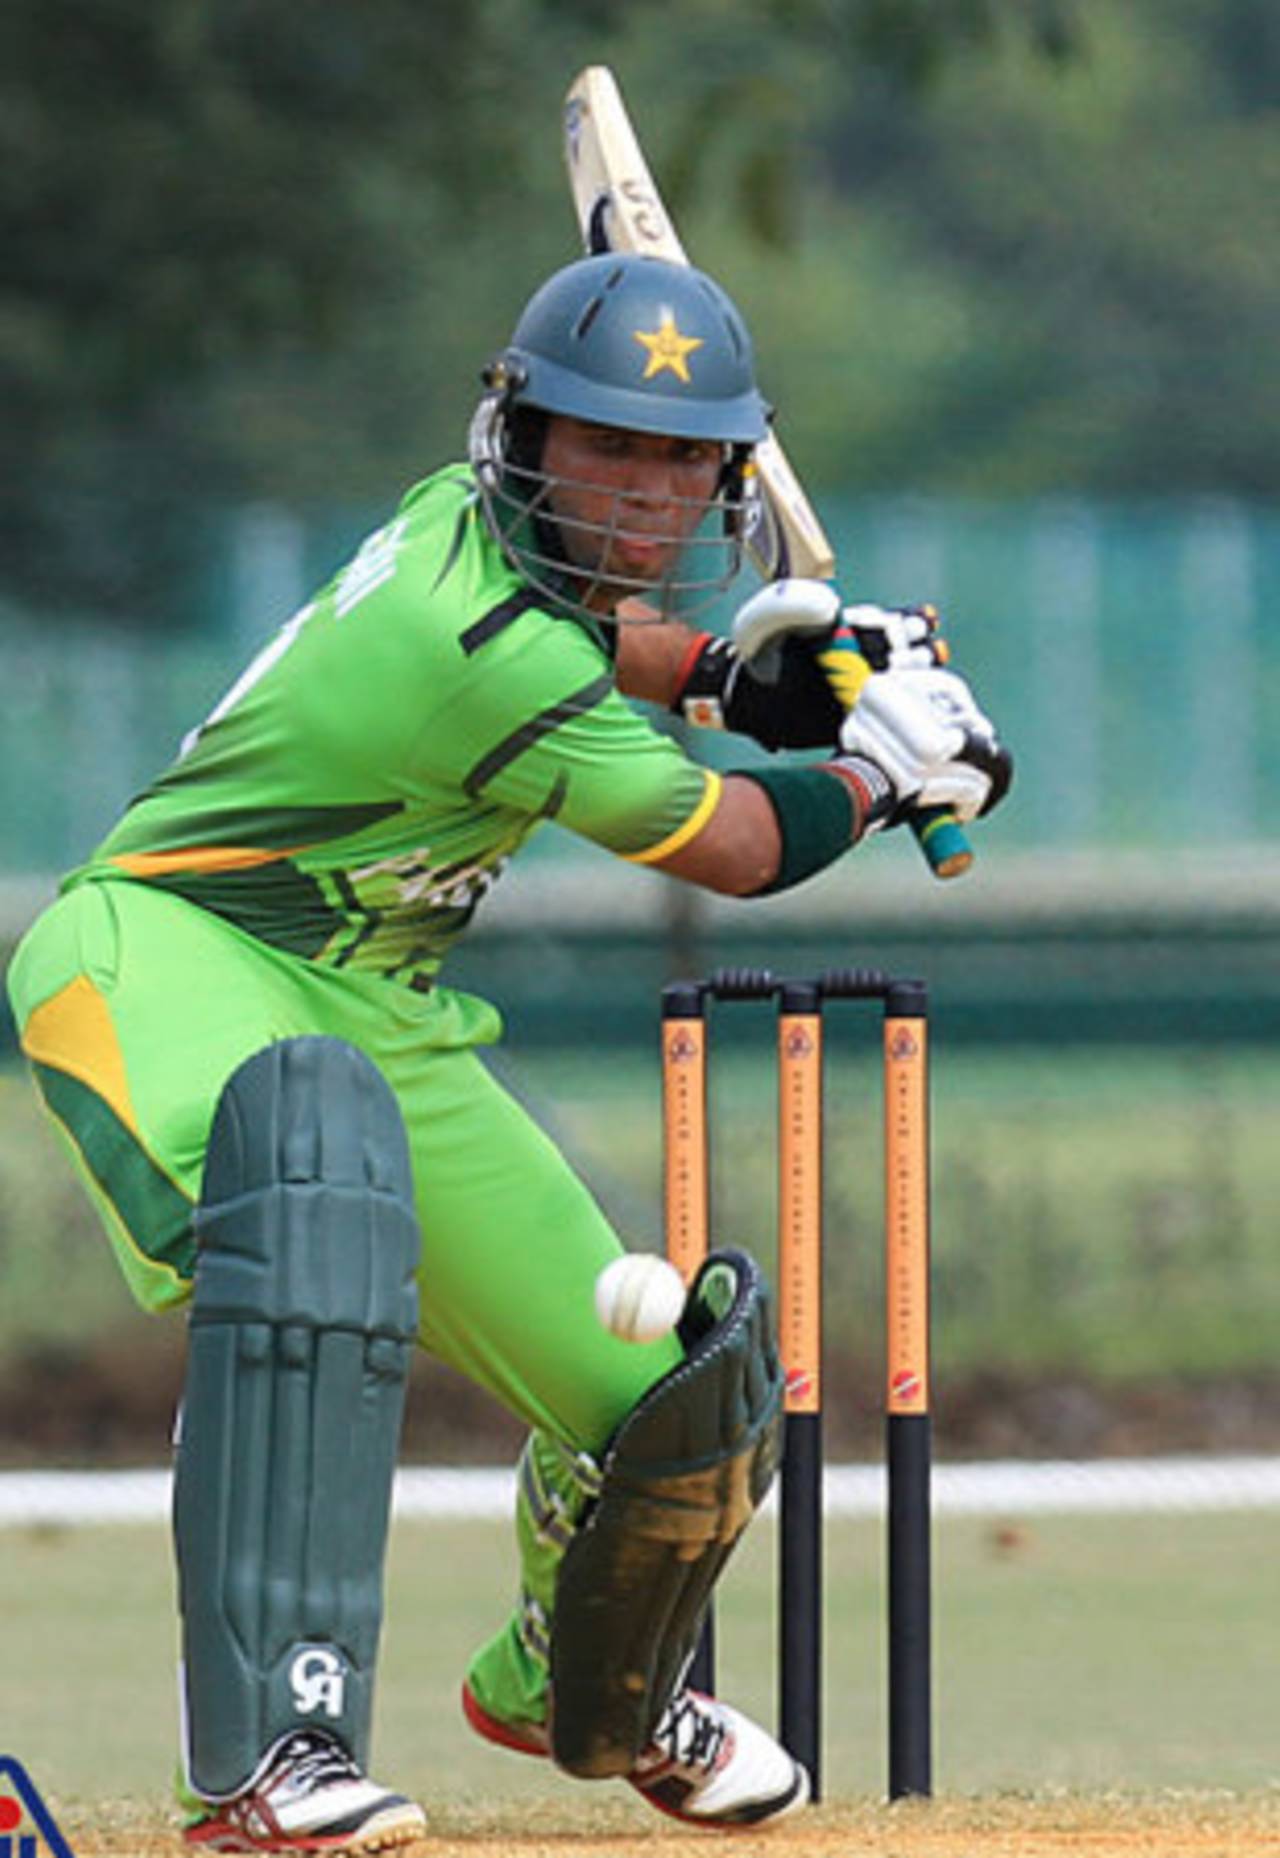 Sami Aslam shone in Pakistan's chase&nbsp;&nbsp;&bull;&nbsp;&nbsp;Peter Lim/Asian Cricket Council